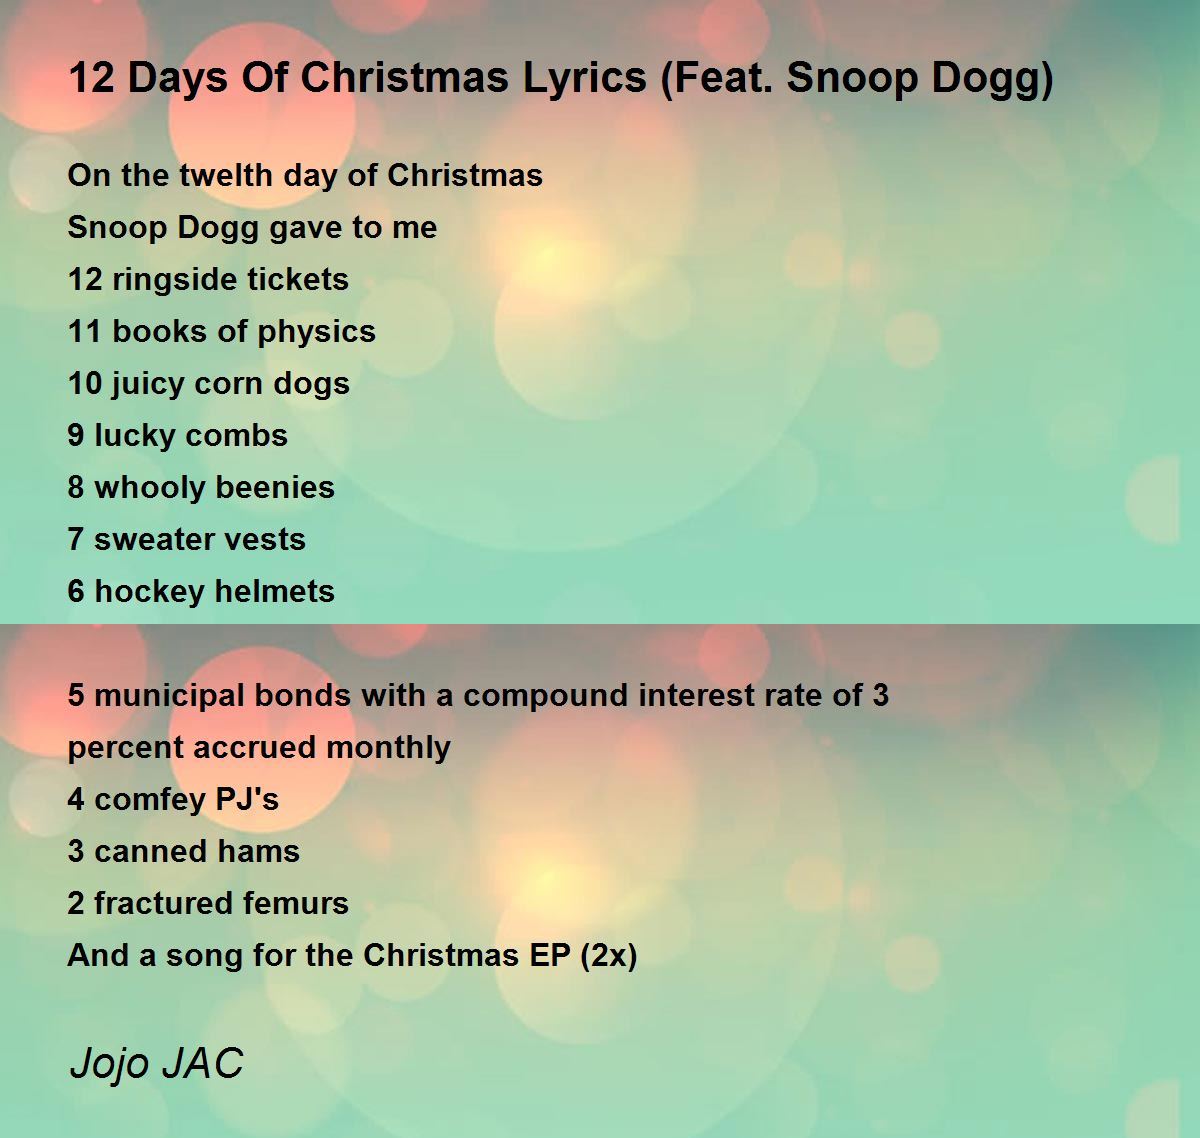 12 Days Of Christmas Lyrics (Feat. Snoop Dogg) - 12 Days Of Christmas Lyrics  (Feat. Snoop Dogg) Poem by Jojo JAC